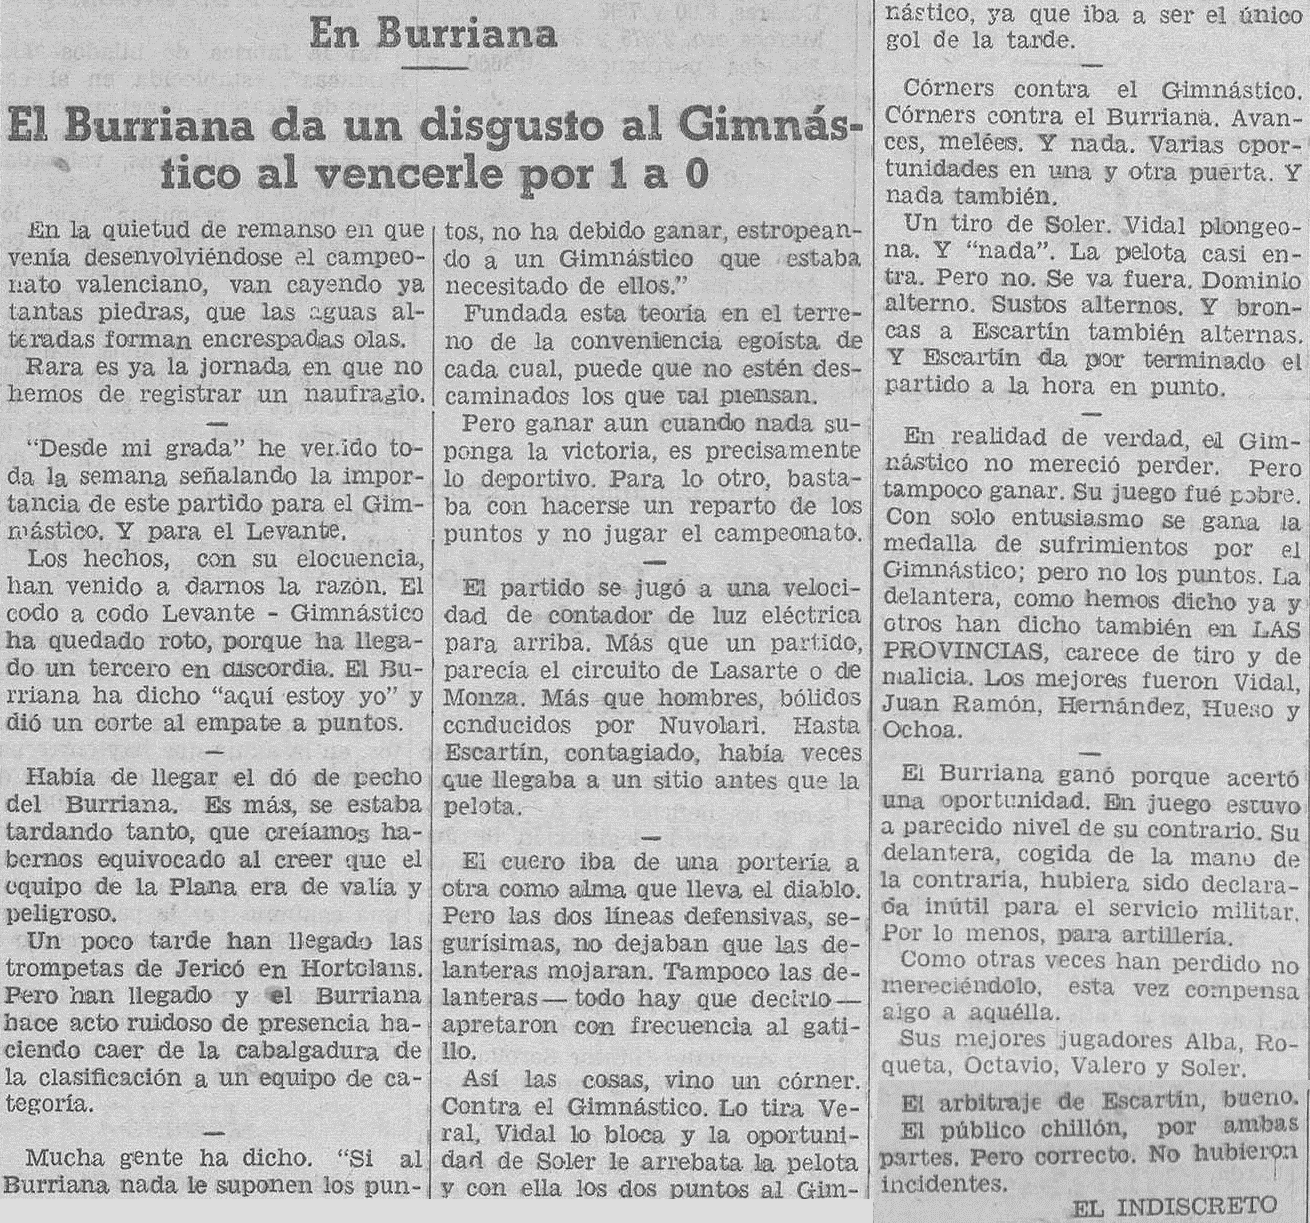 1933.10.08 (8 октября 1933), Бурриана - Гимнастико, 1-0.png